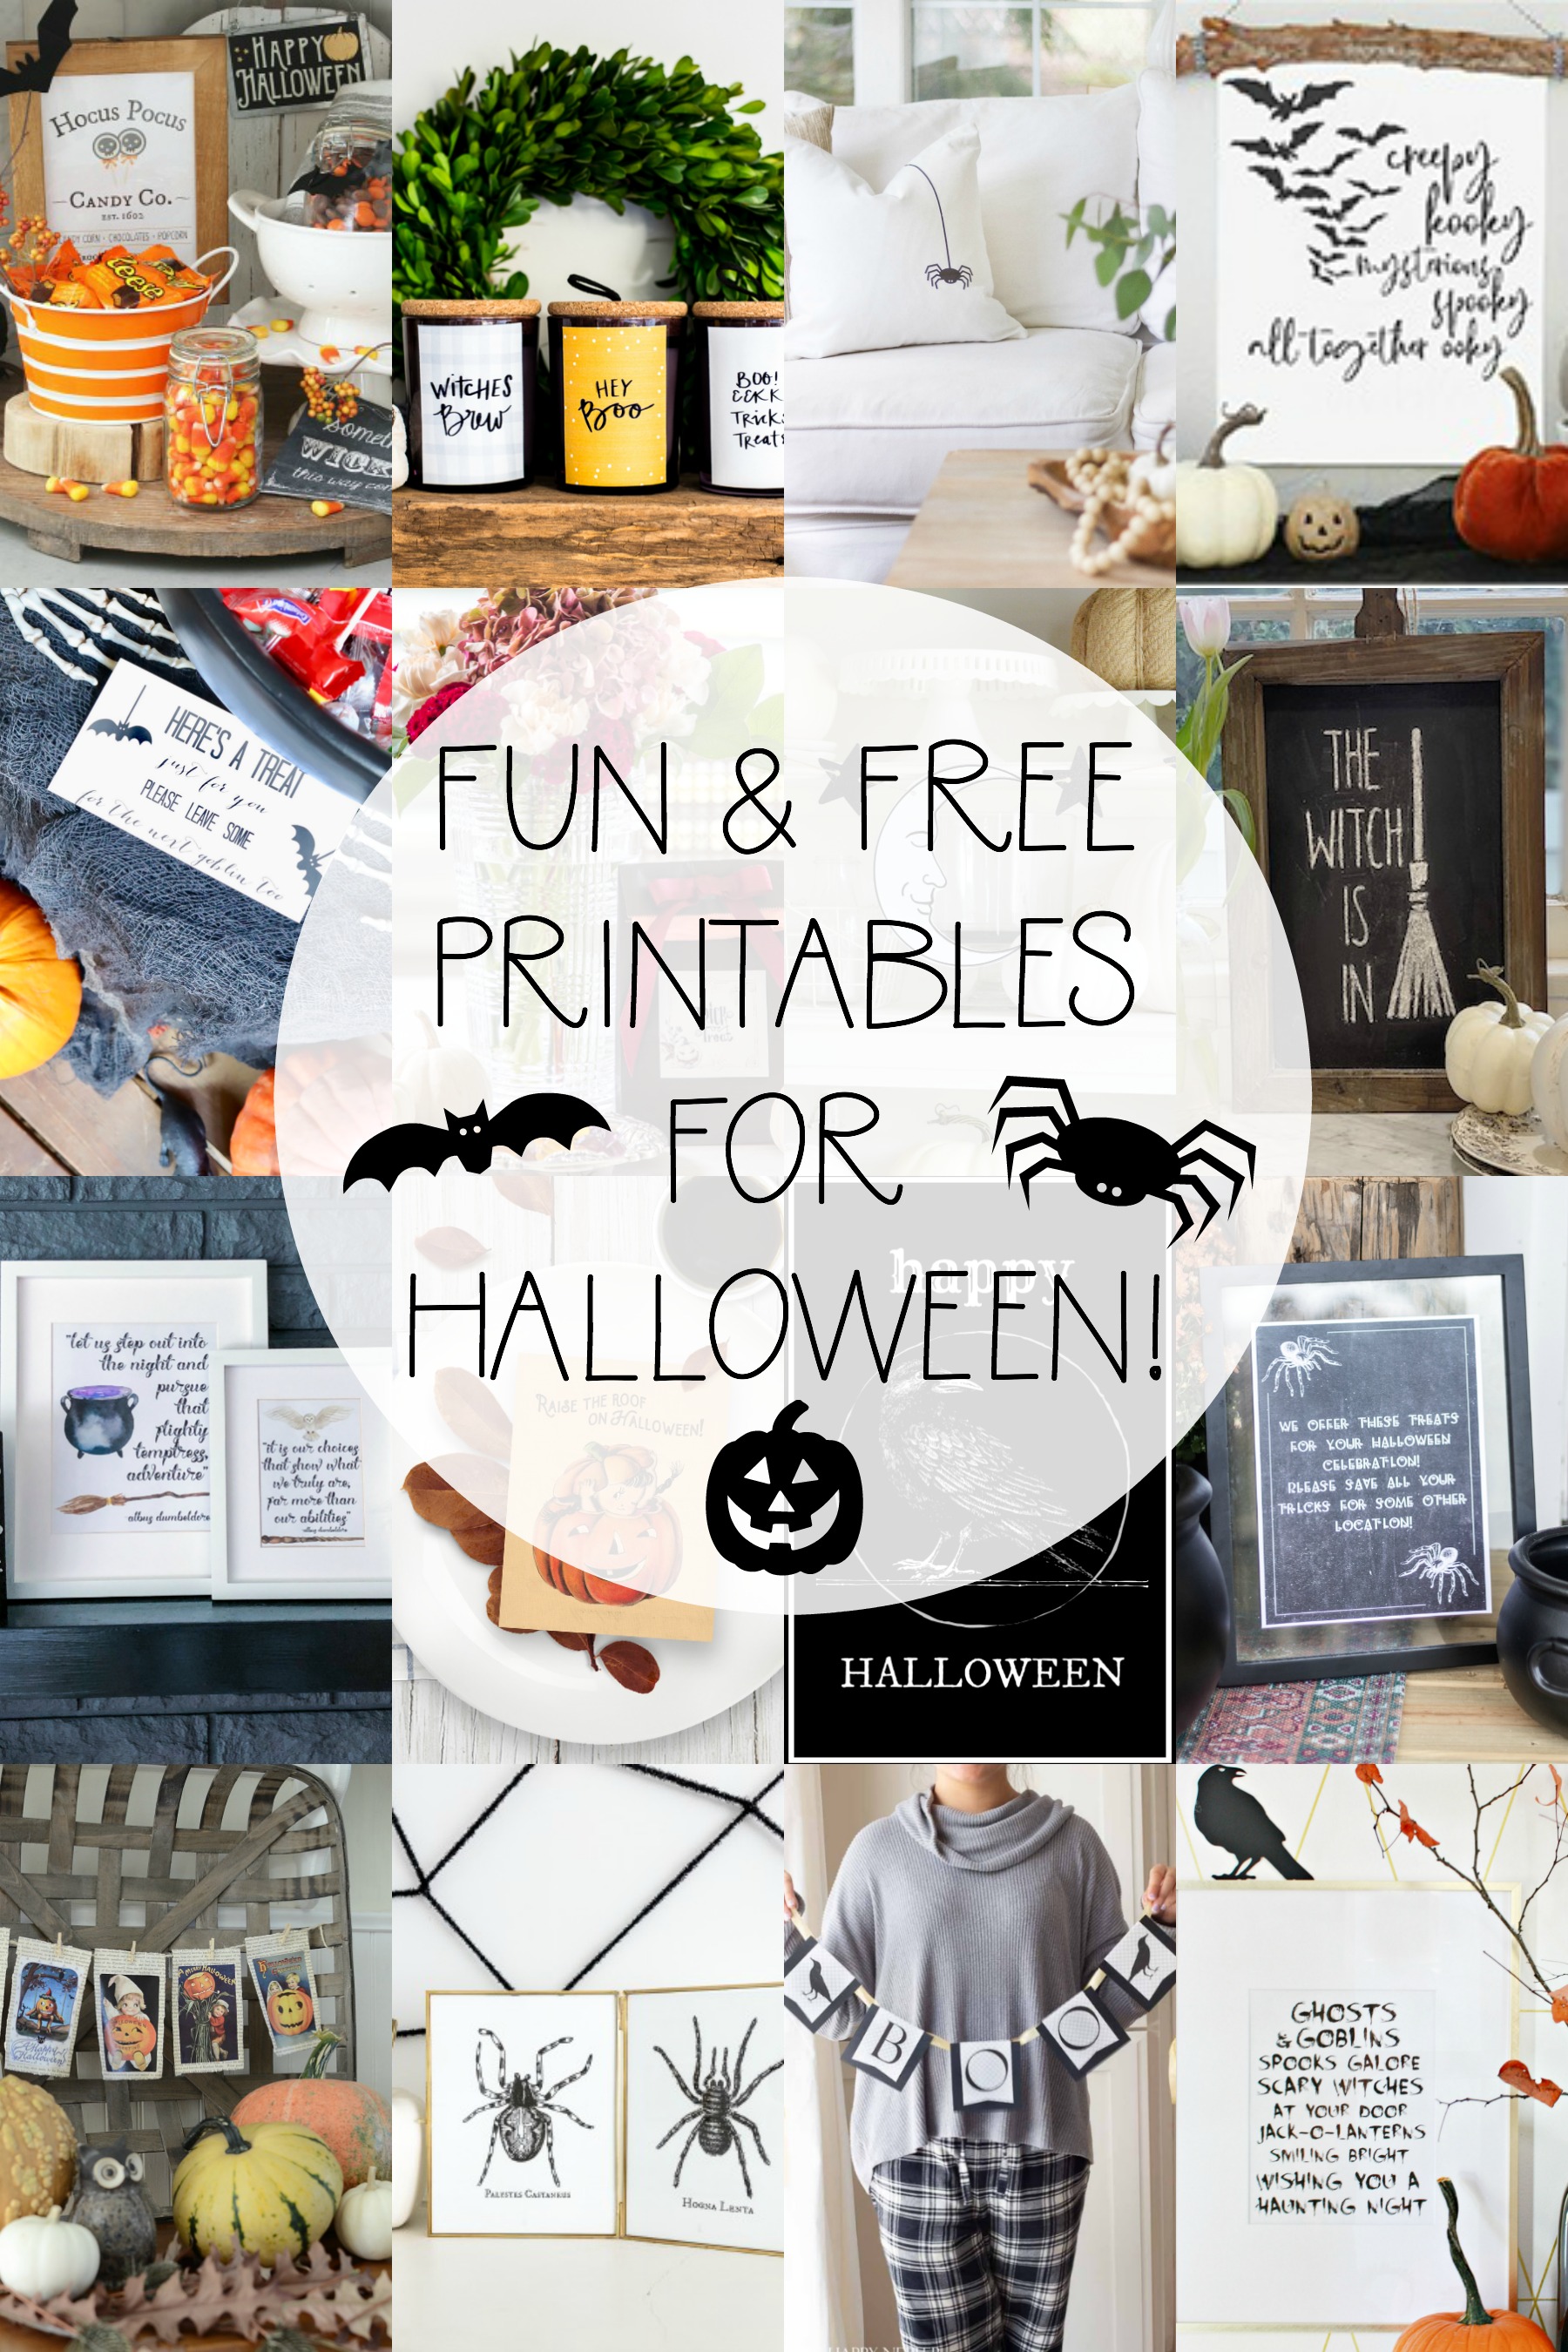 Fun & Free Printables For Halloween poster.